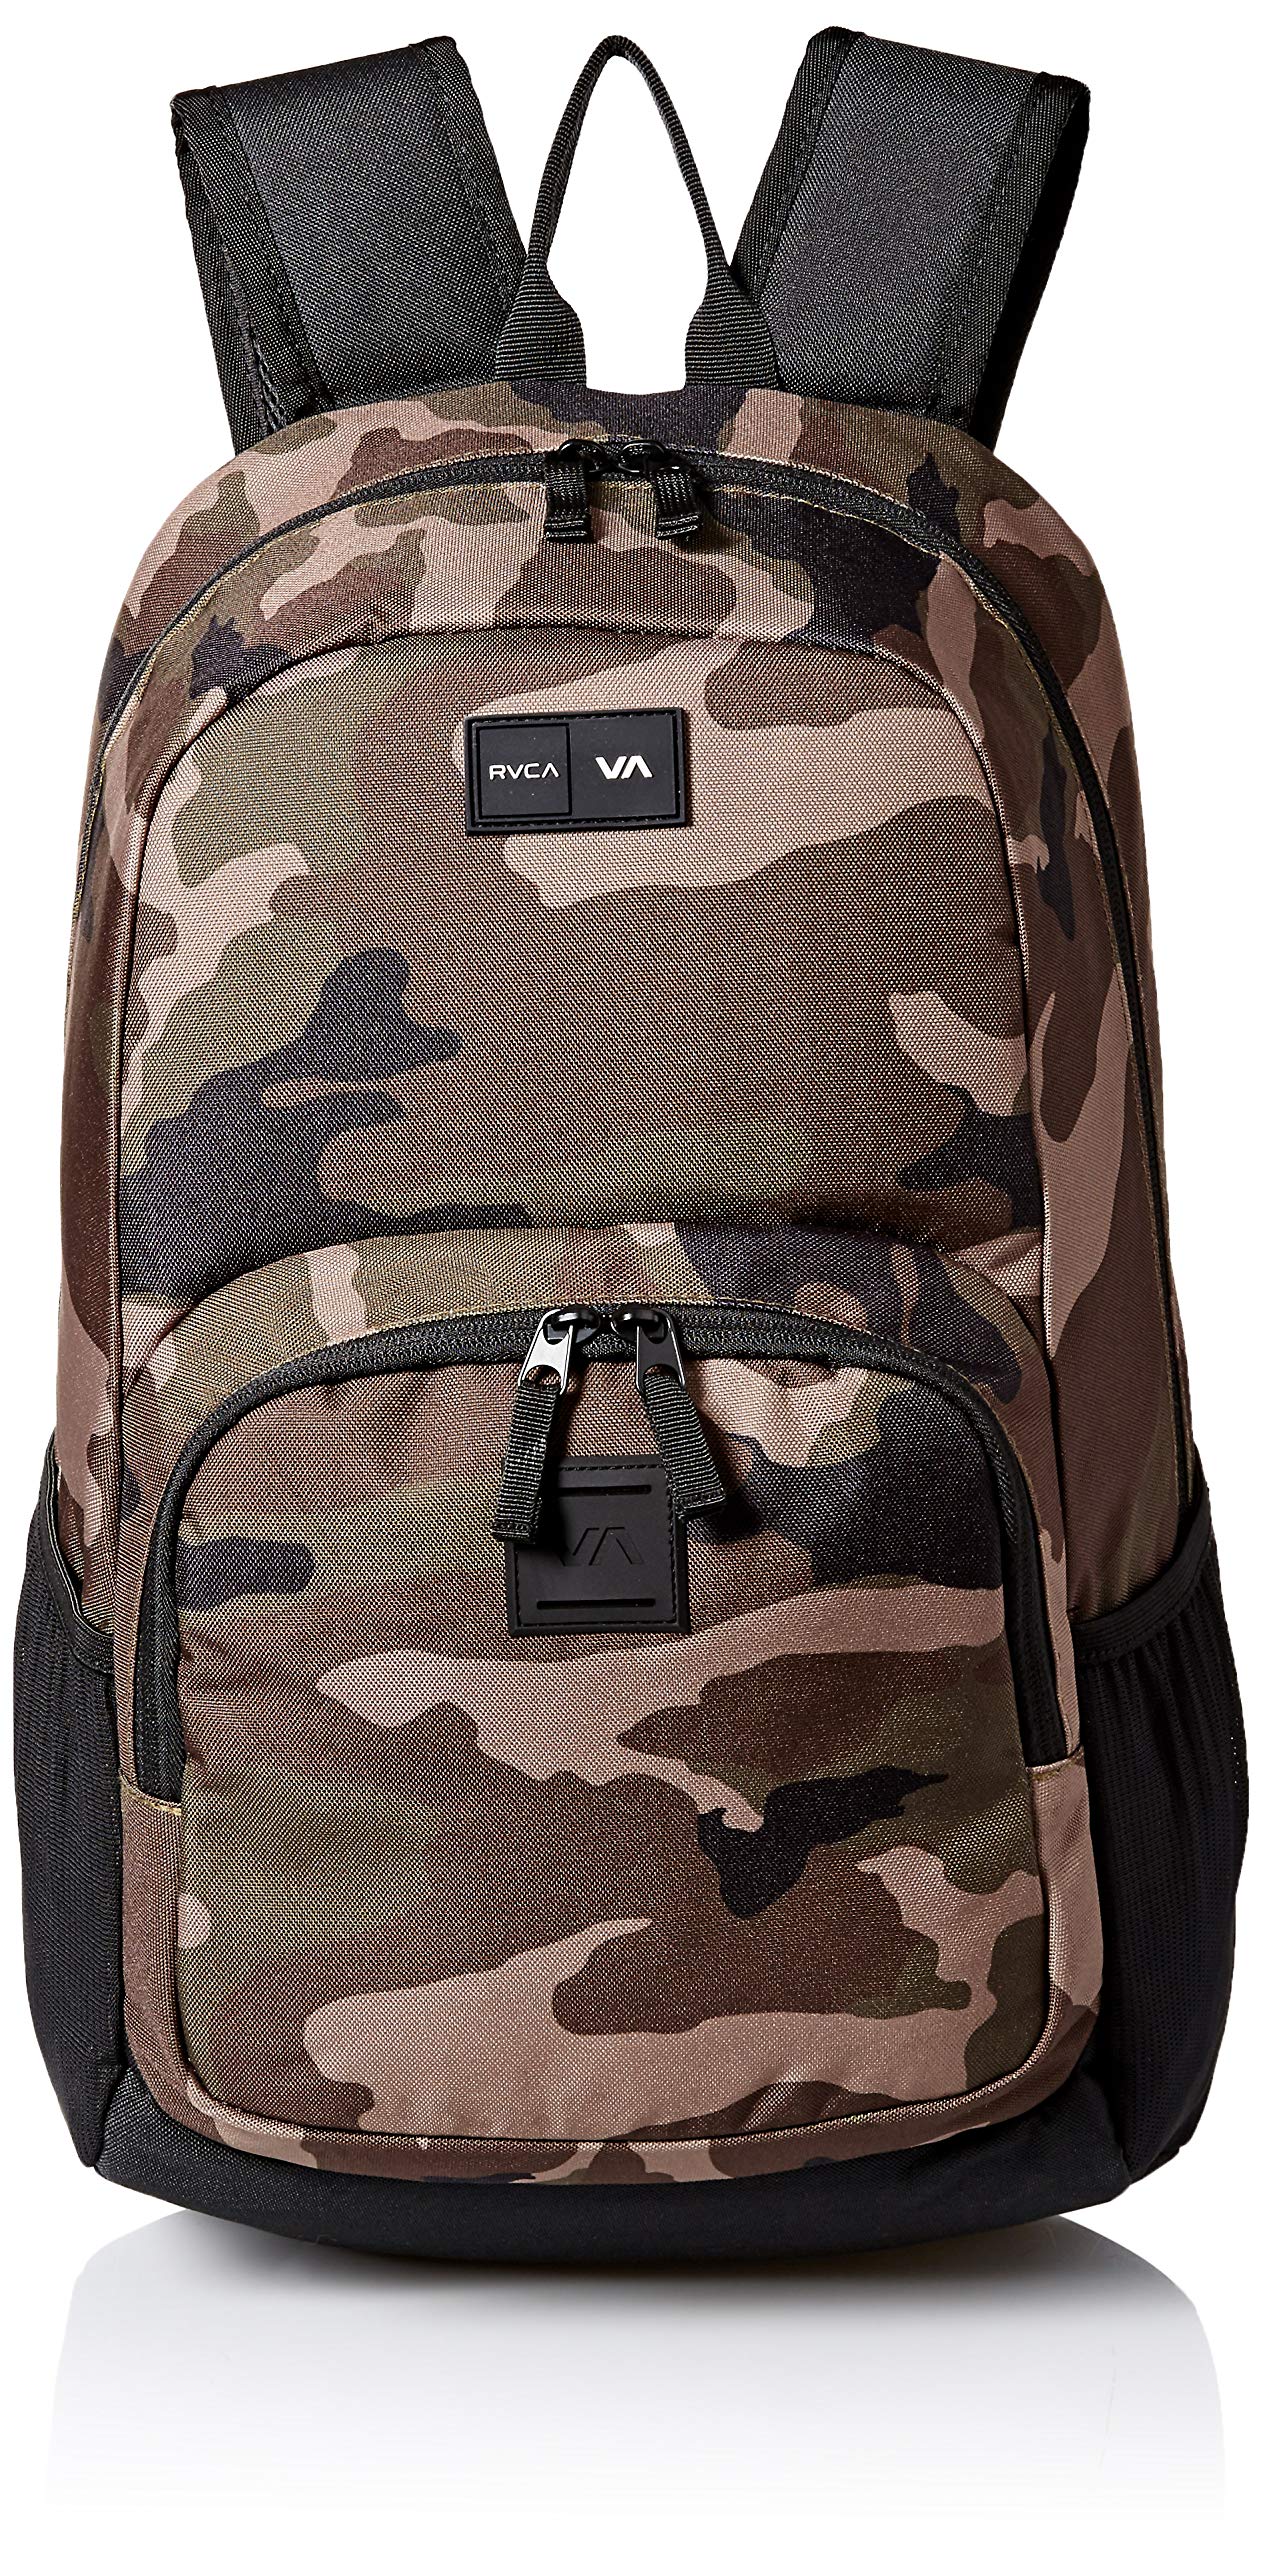 RVCA Men's Estate Backpack II, camo, ONE SIZE– backpacks4less.com